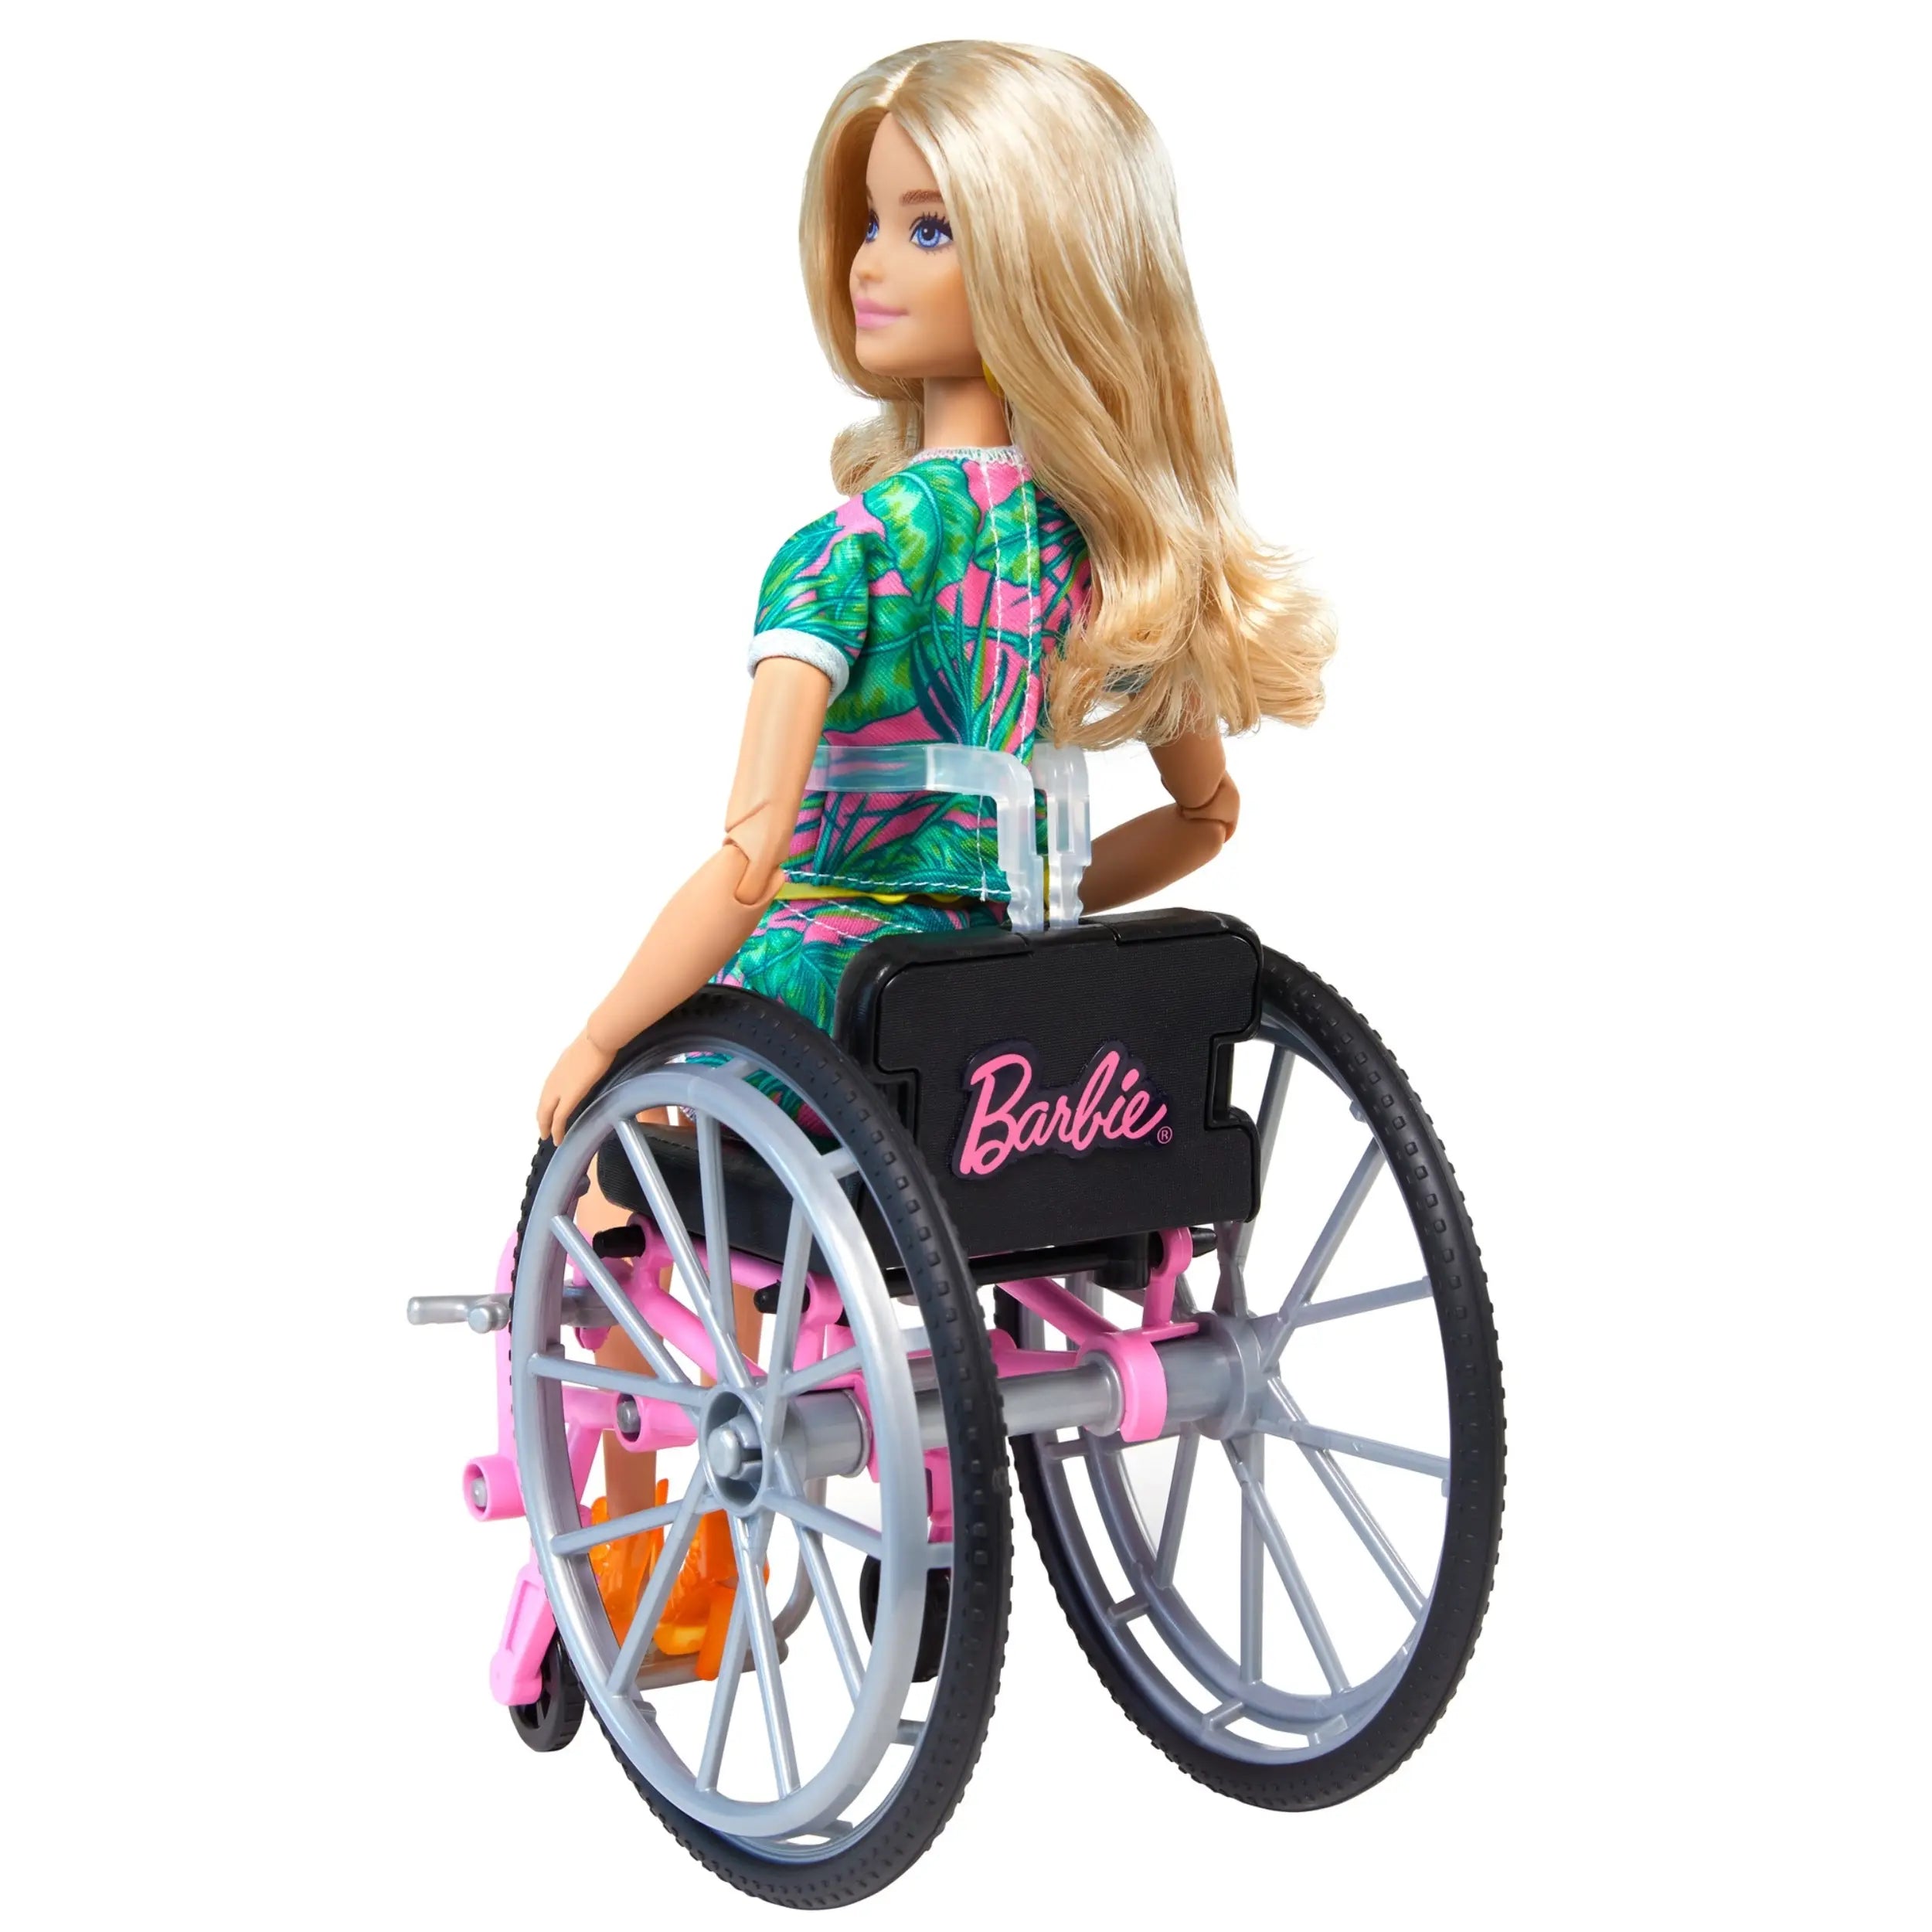 Mattel - Barbie Fashionistas Doll And Accessory GRB93